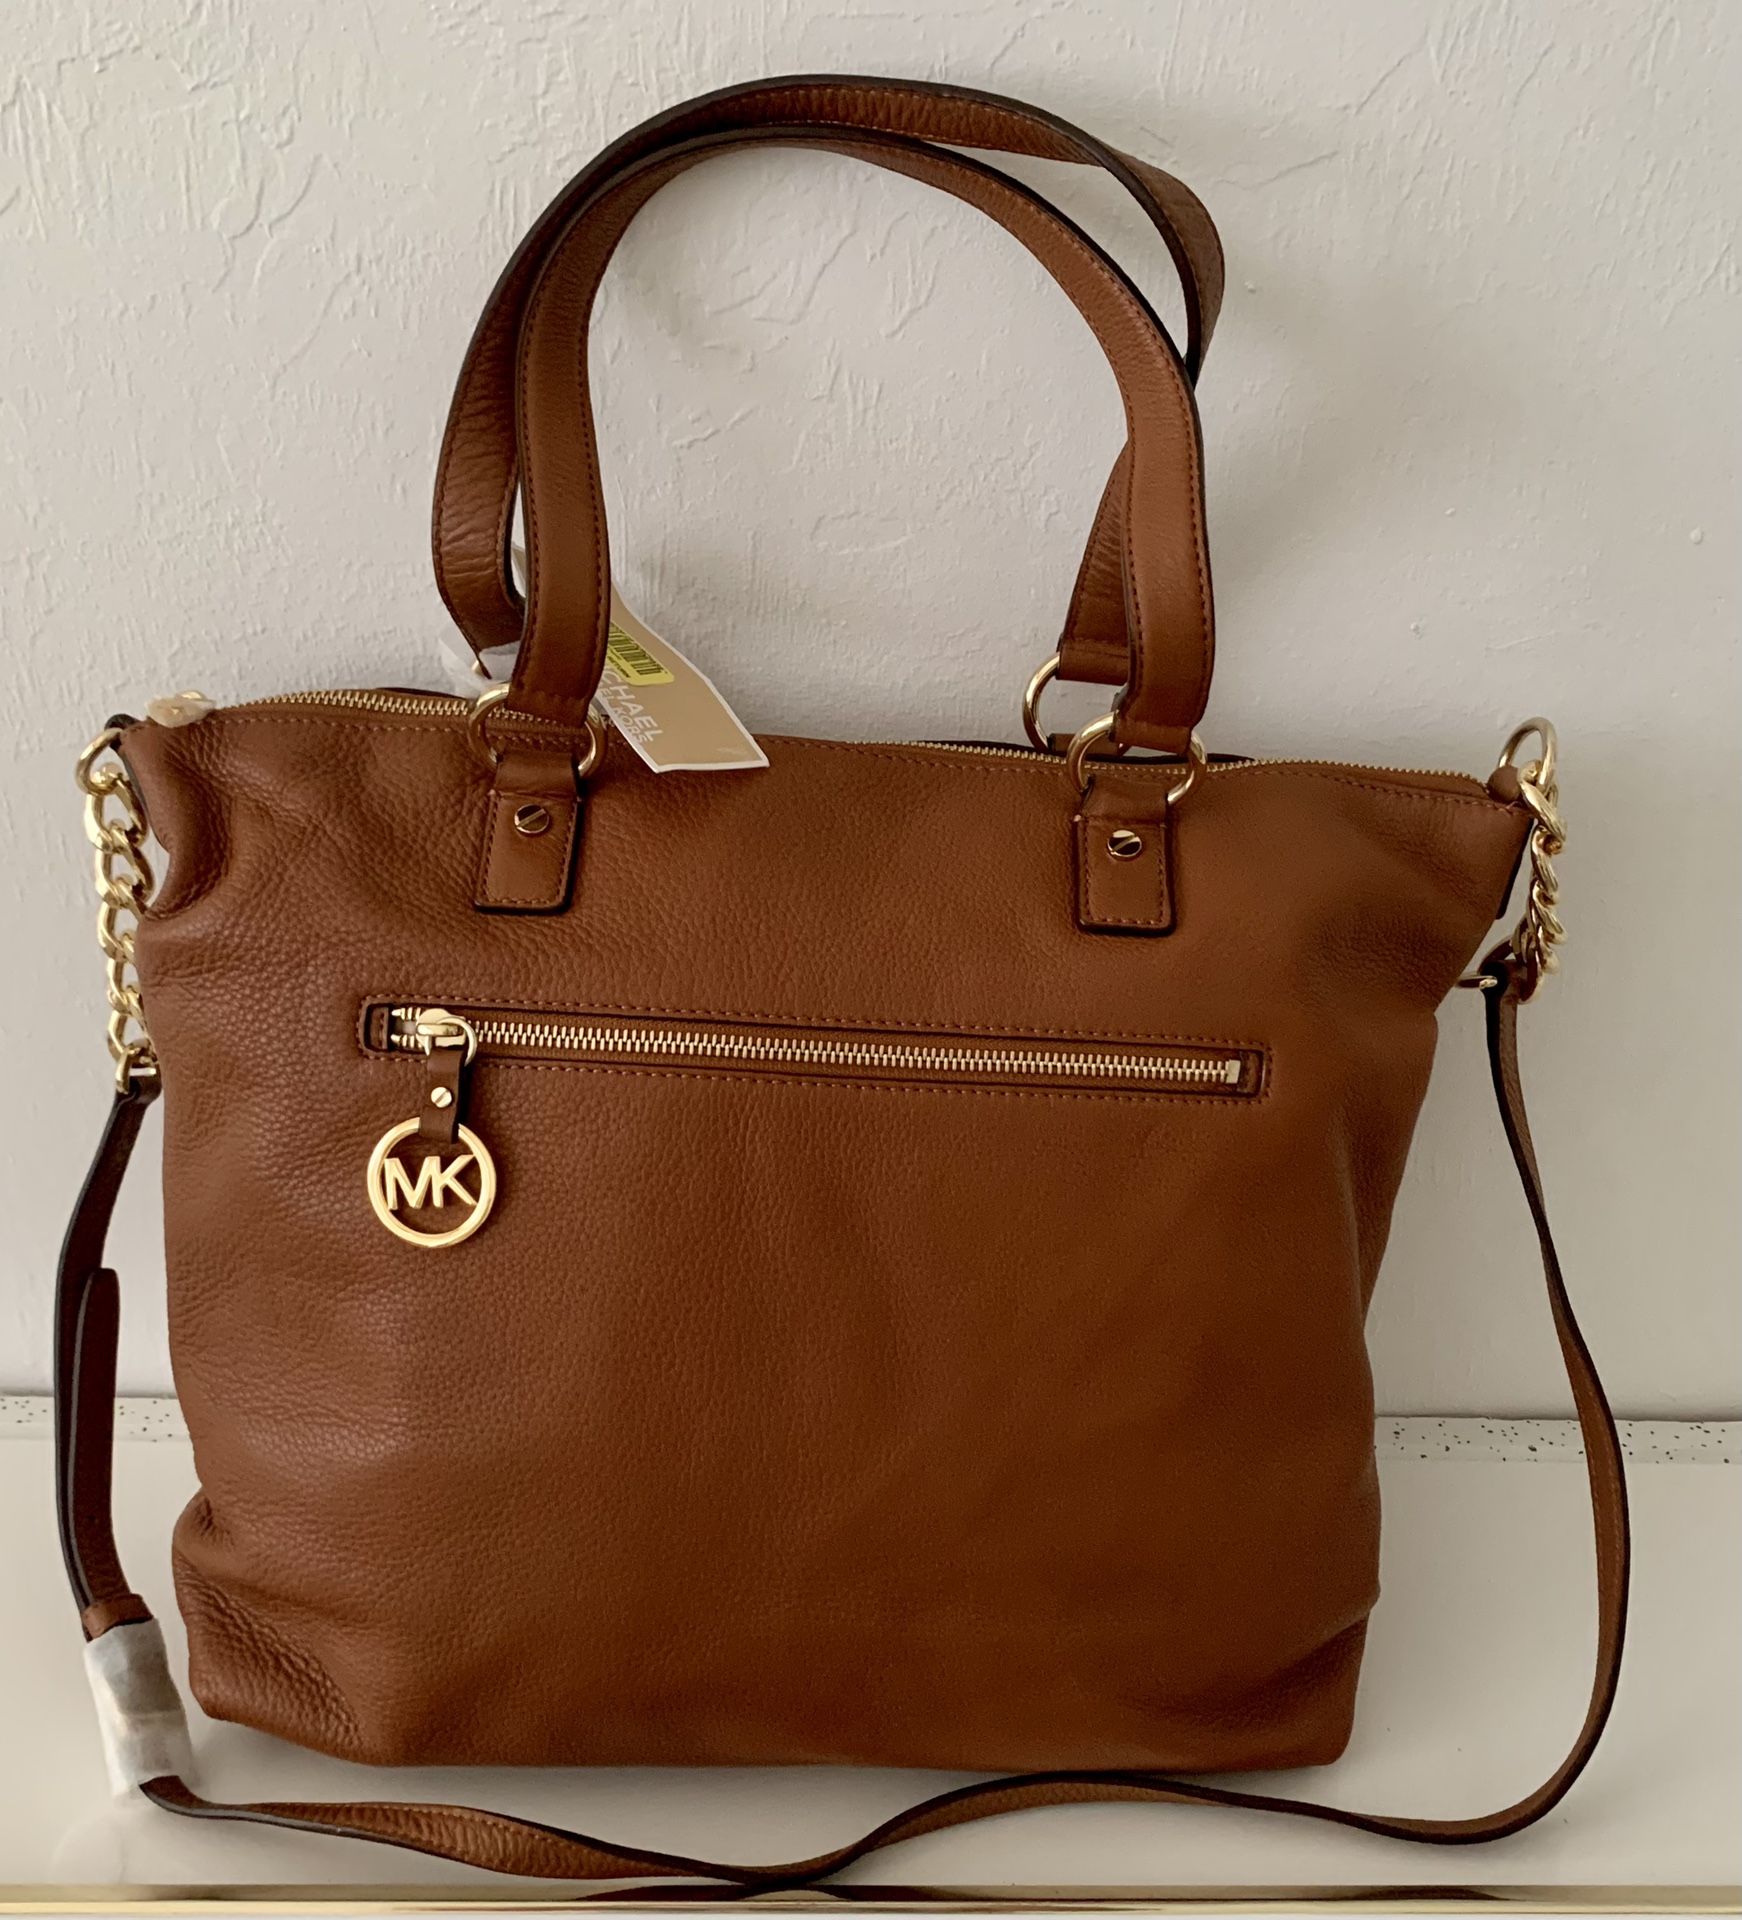 New Michael Kors Fulton genuine leather luggage brown beautiful large bag